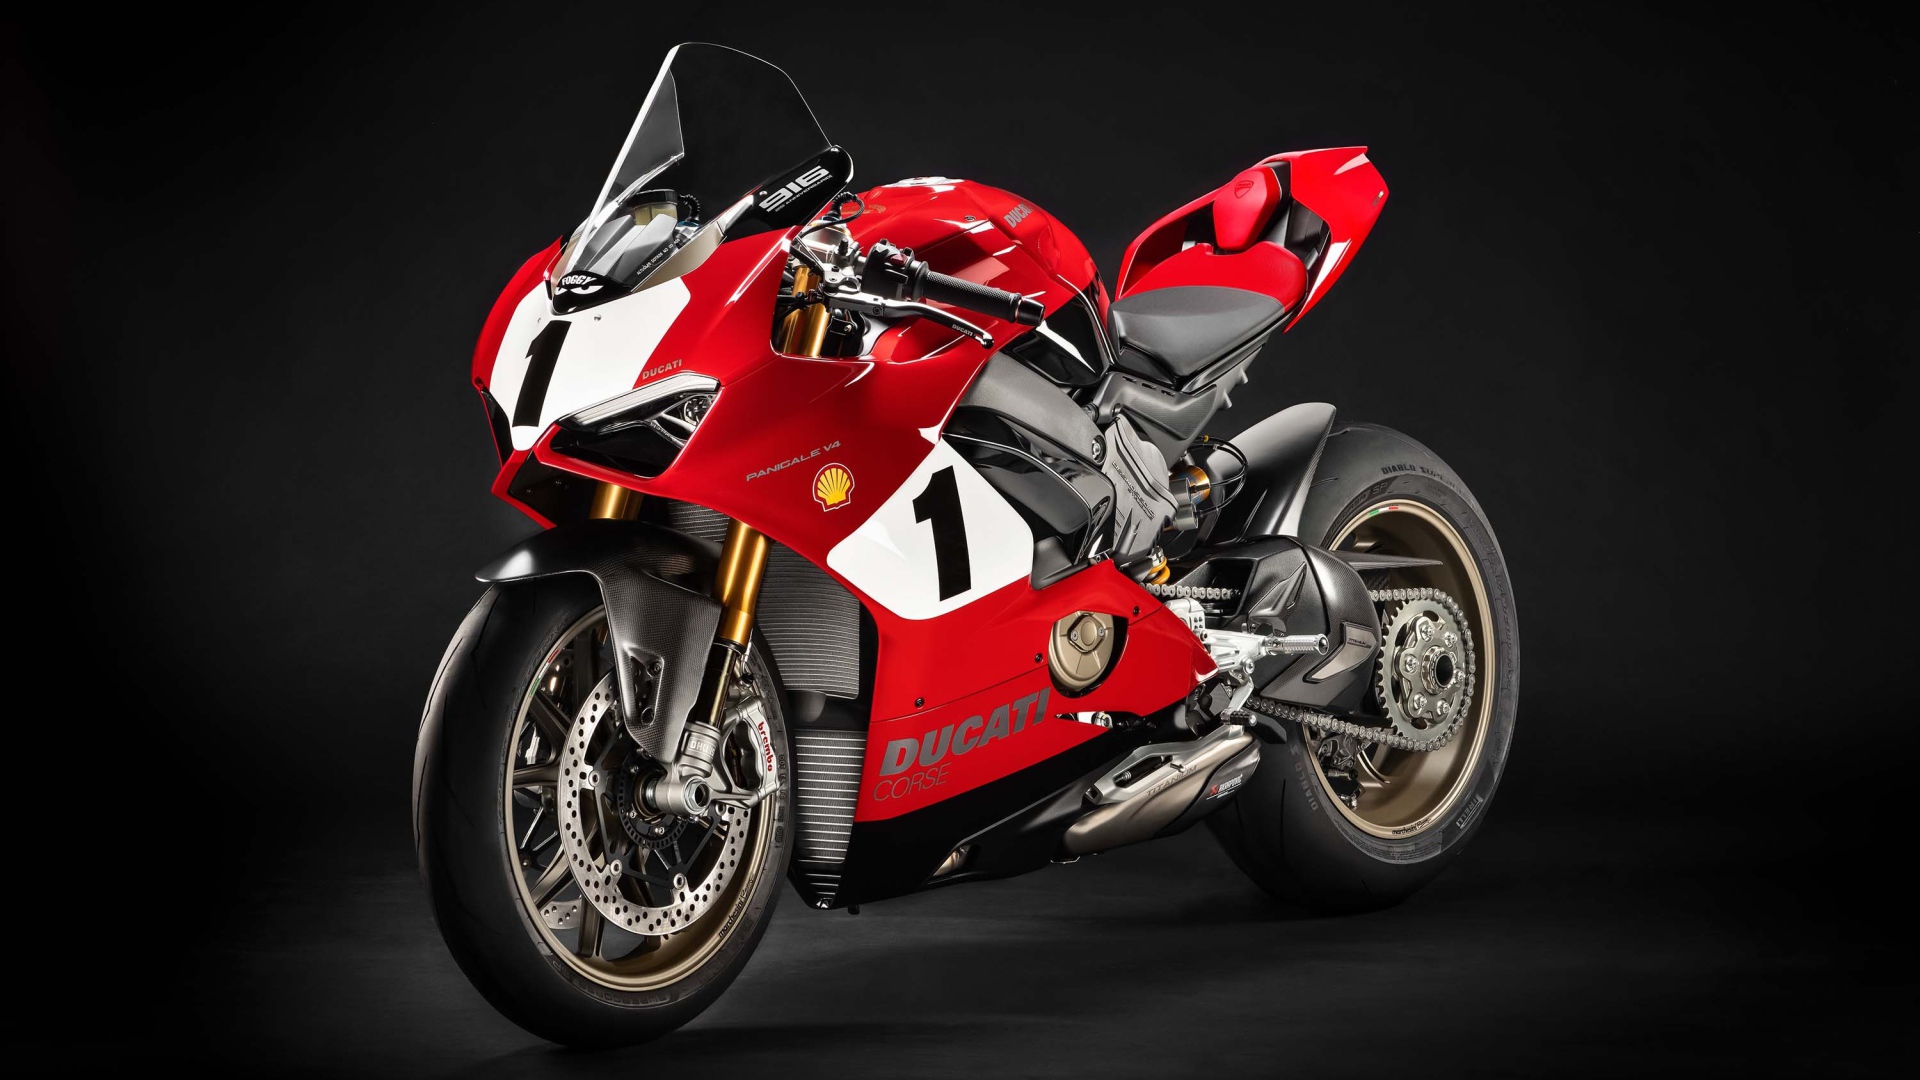 Мотоцикл Ducati Panigale V4 Superbike 2019 года на сером фоне